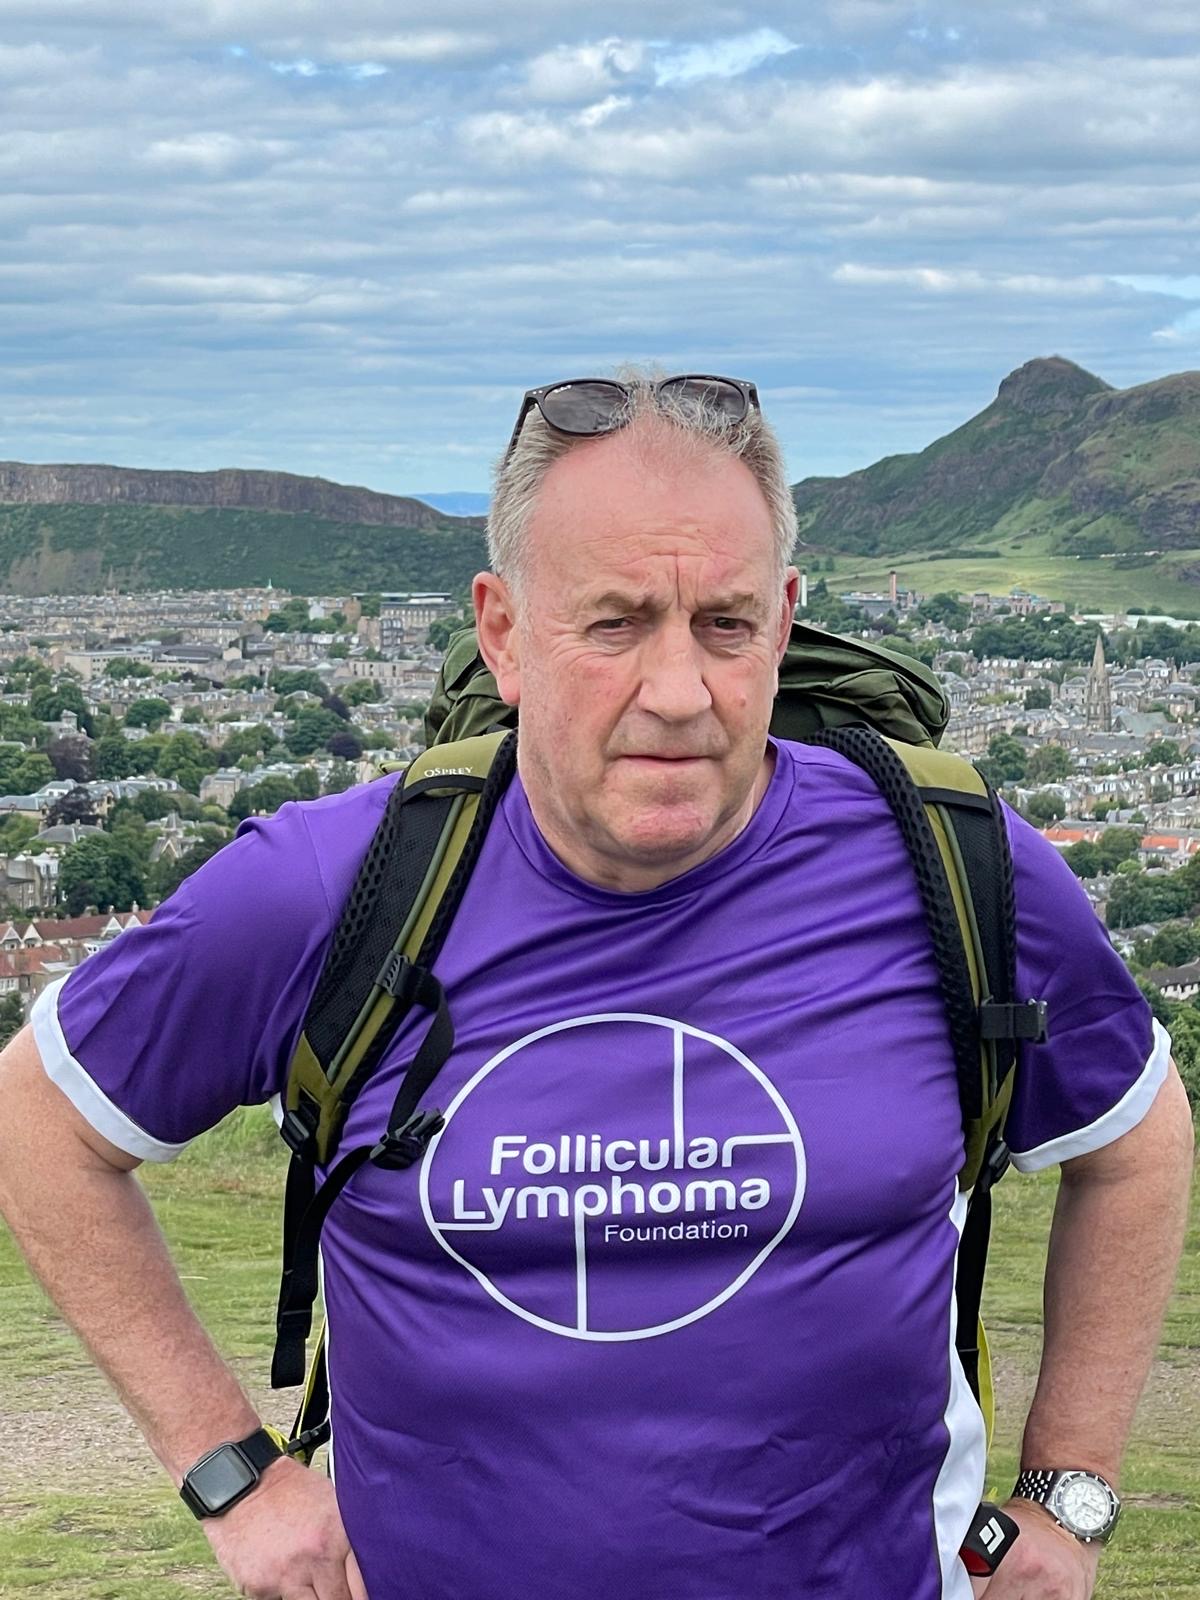 Mark Thorley to trek across Pyrenees in aid of Follicular Lymphoma Foundation